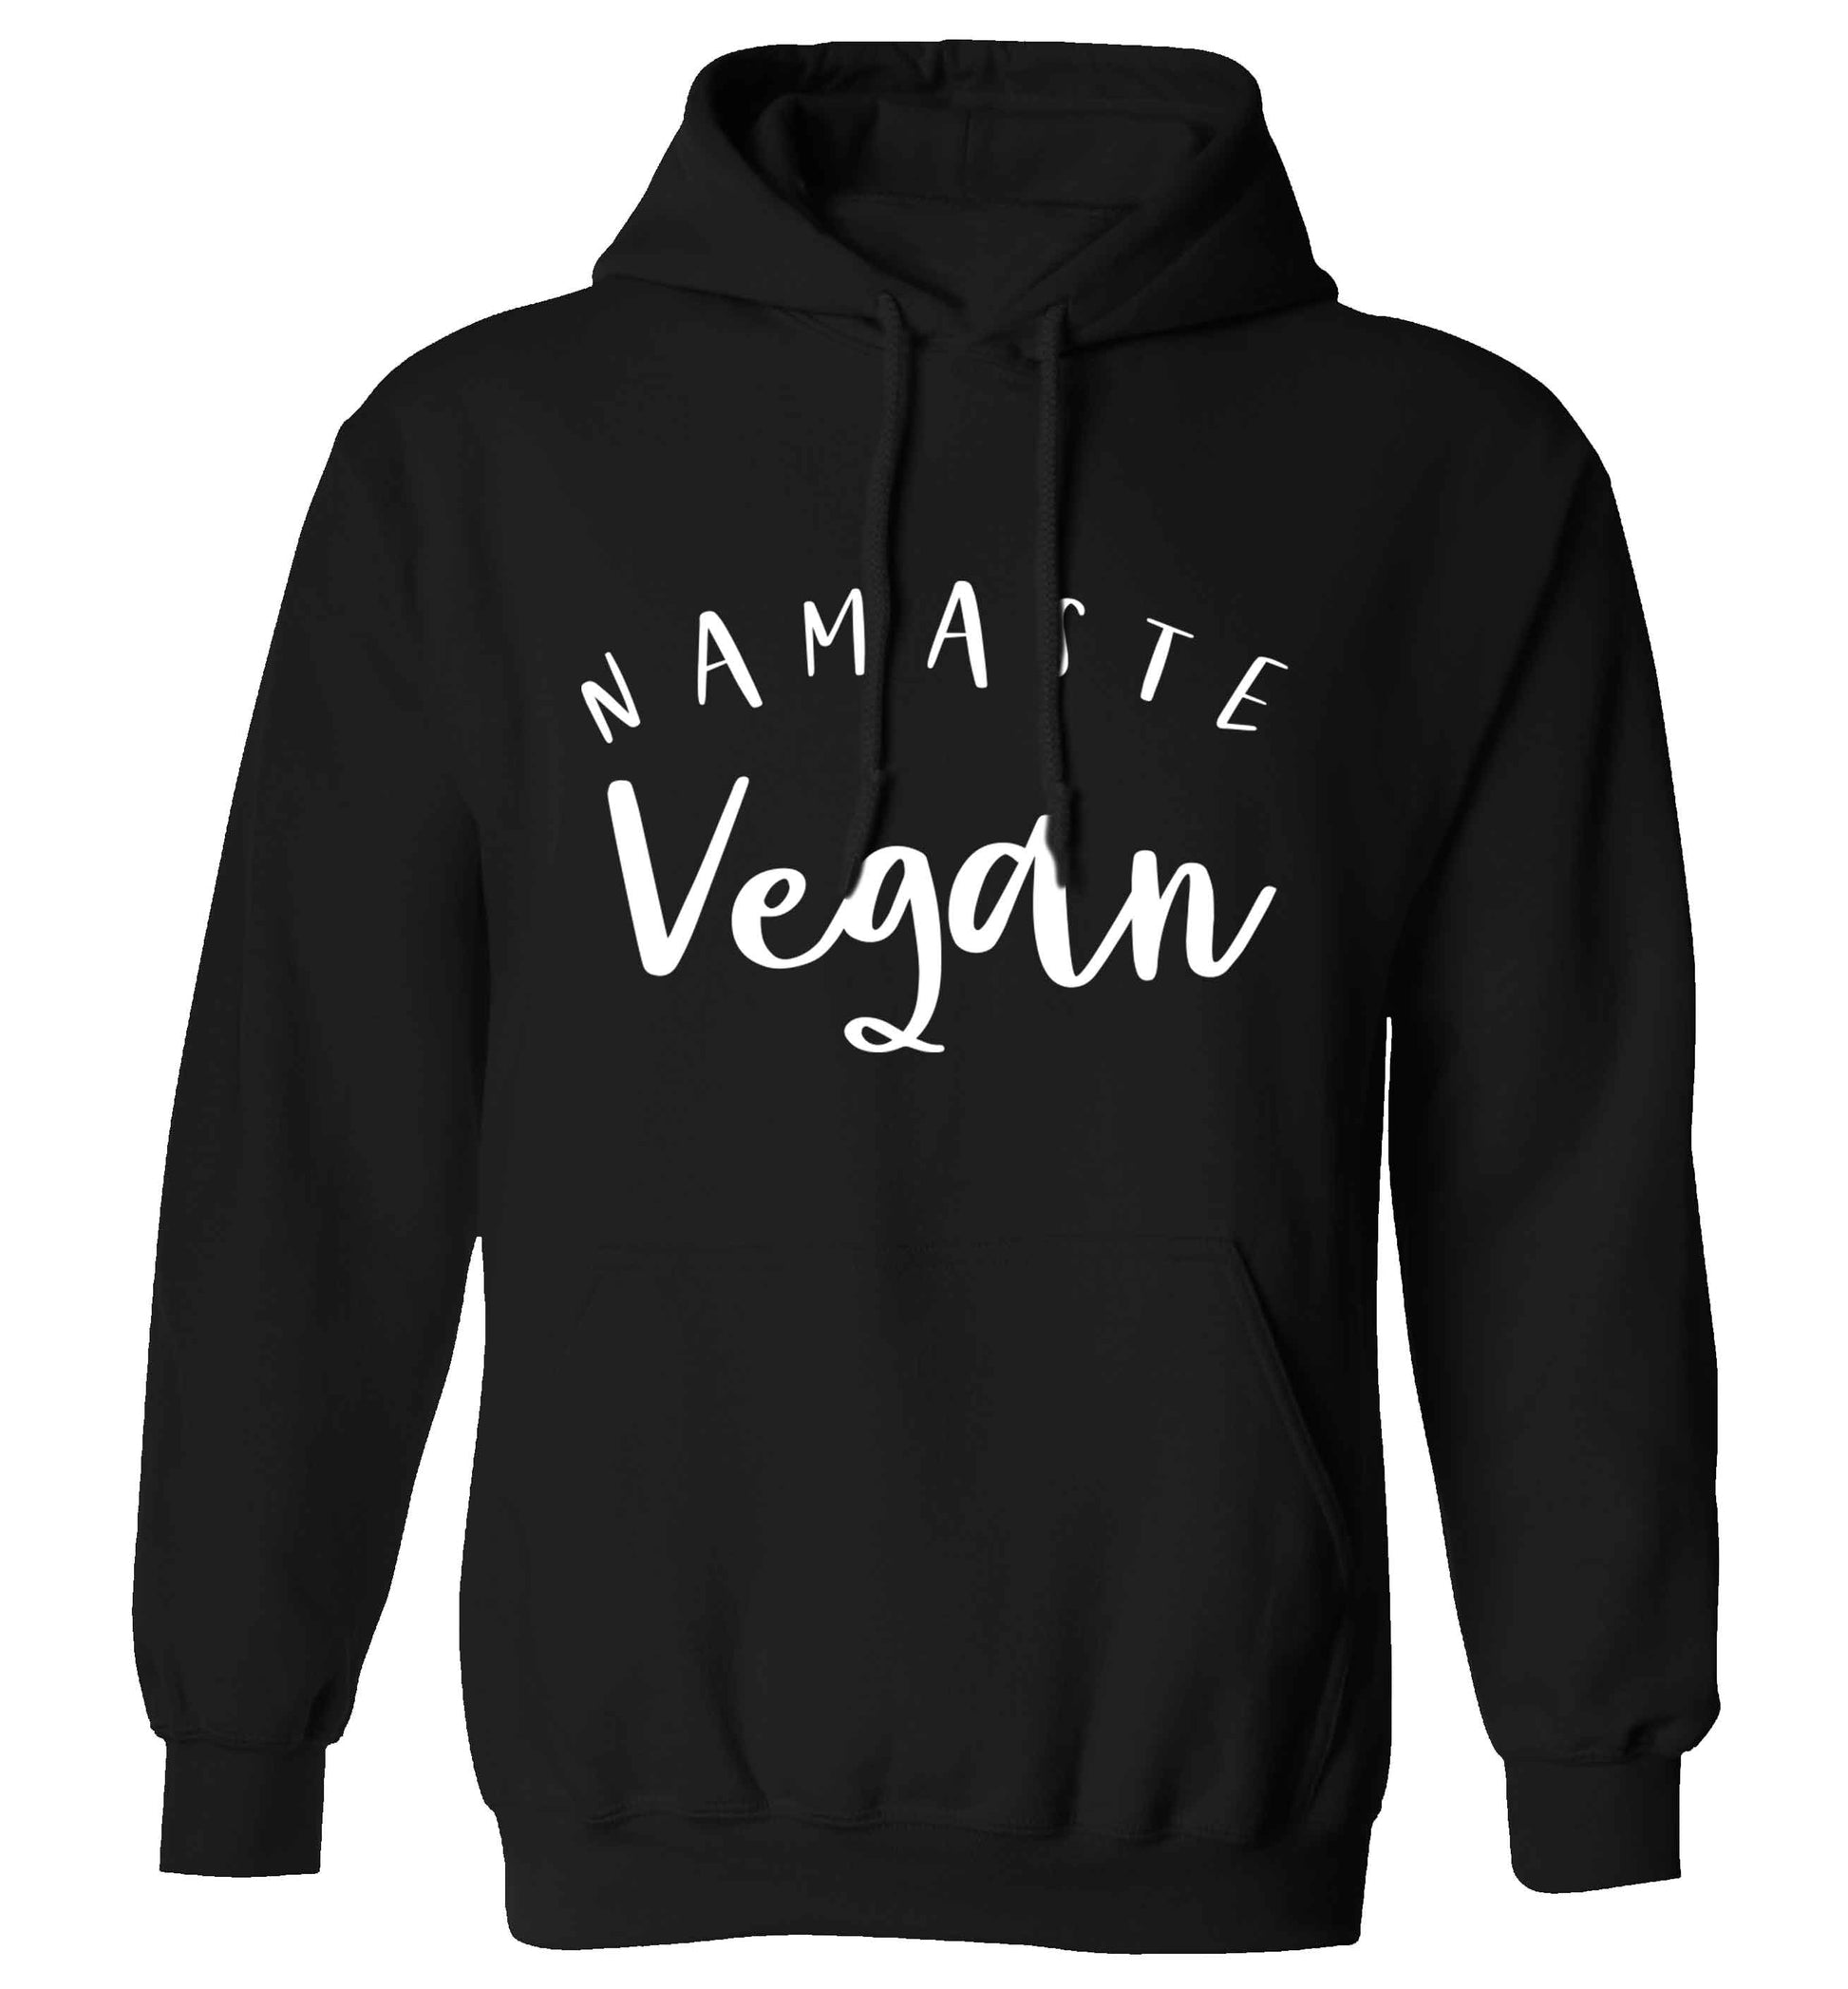 Namaste vegan adults unisex black hoodie 2XL